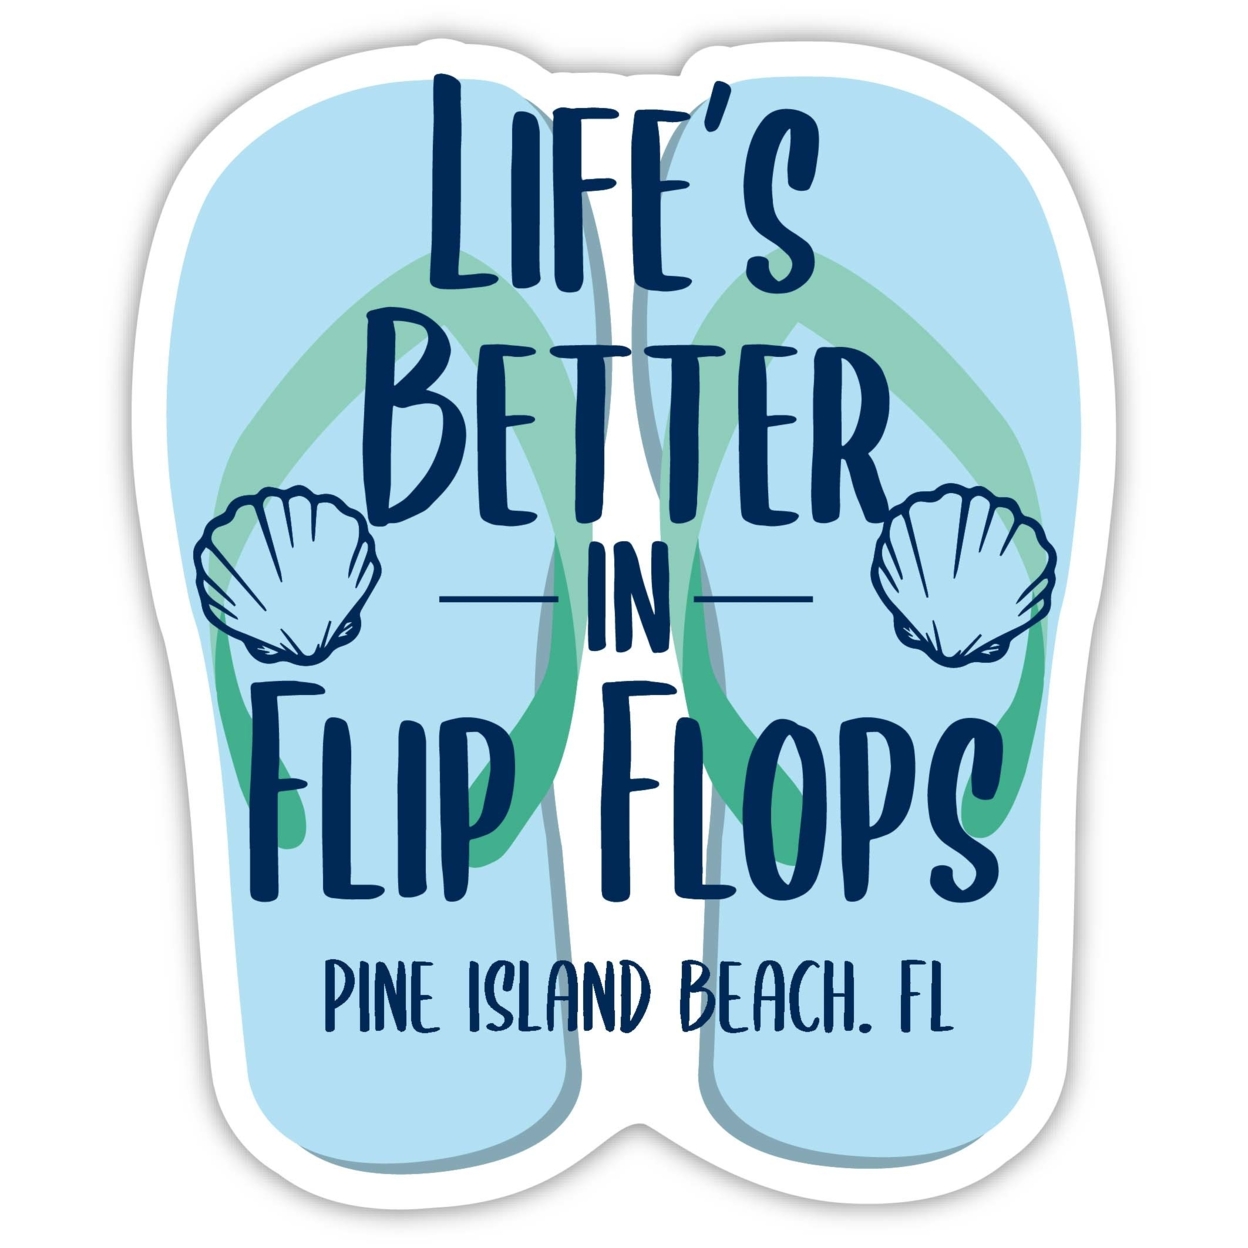 Pine Island Beach Florida Souvenir 4 Inch Vinyl Decal Sticker Flip Flop Design